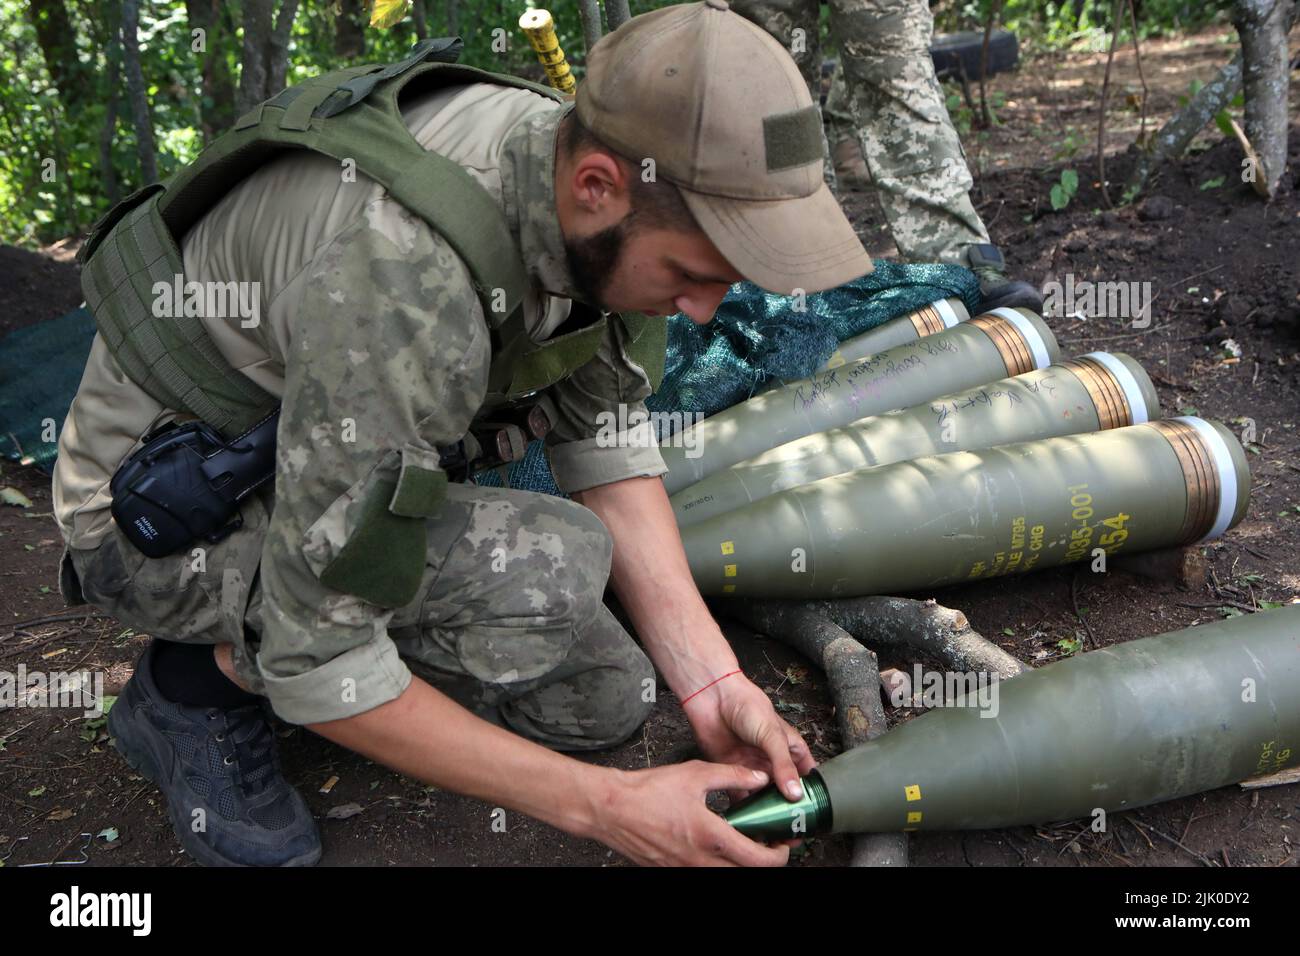 KHARKIV REGION, UKRAINE - JULY 28, 2022 - A Ukrainian serviceman attends to ammunition, Kharkiv Region, northeastern Ukraine. This photo cannot be dis Stock Photo